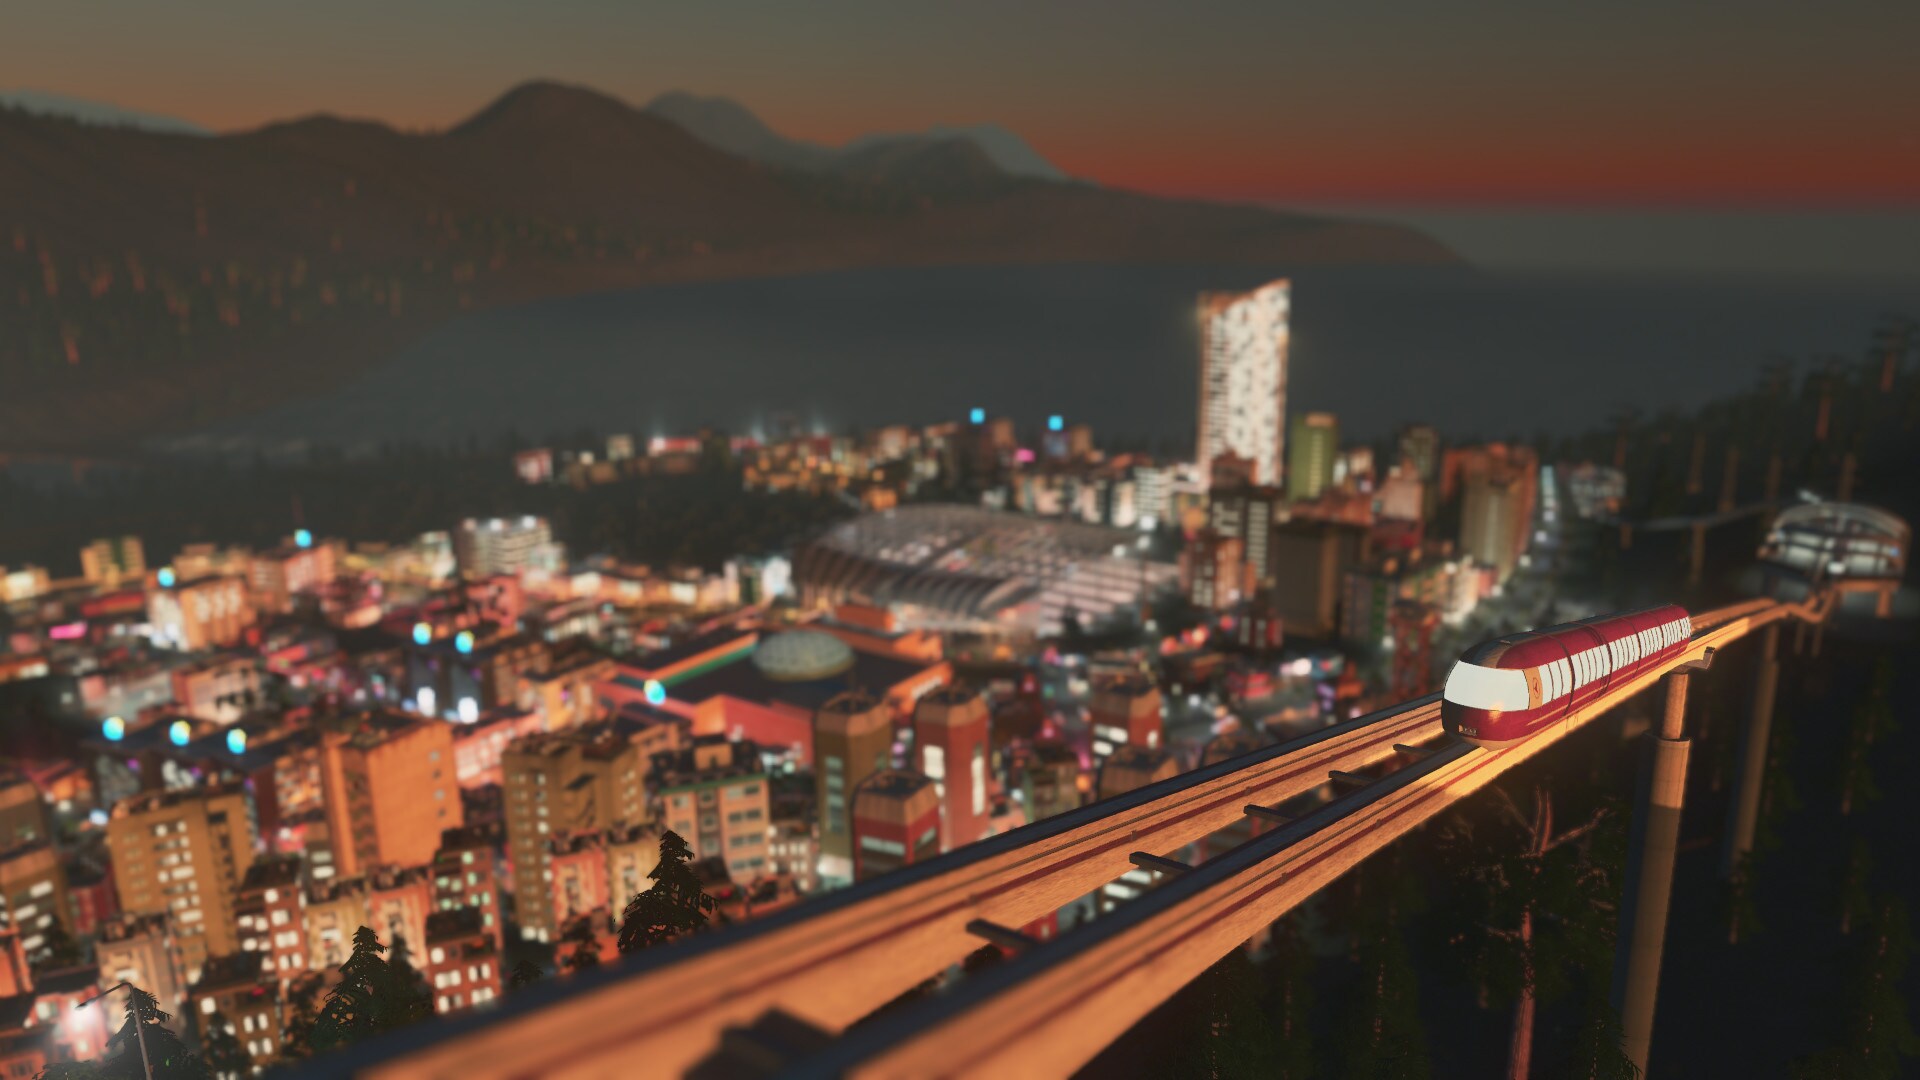 cities skylines g2a